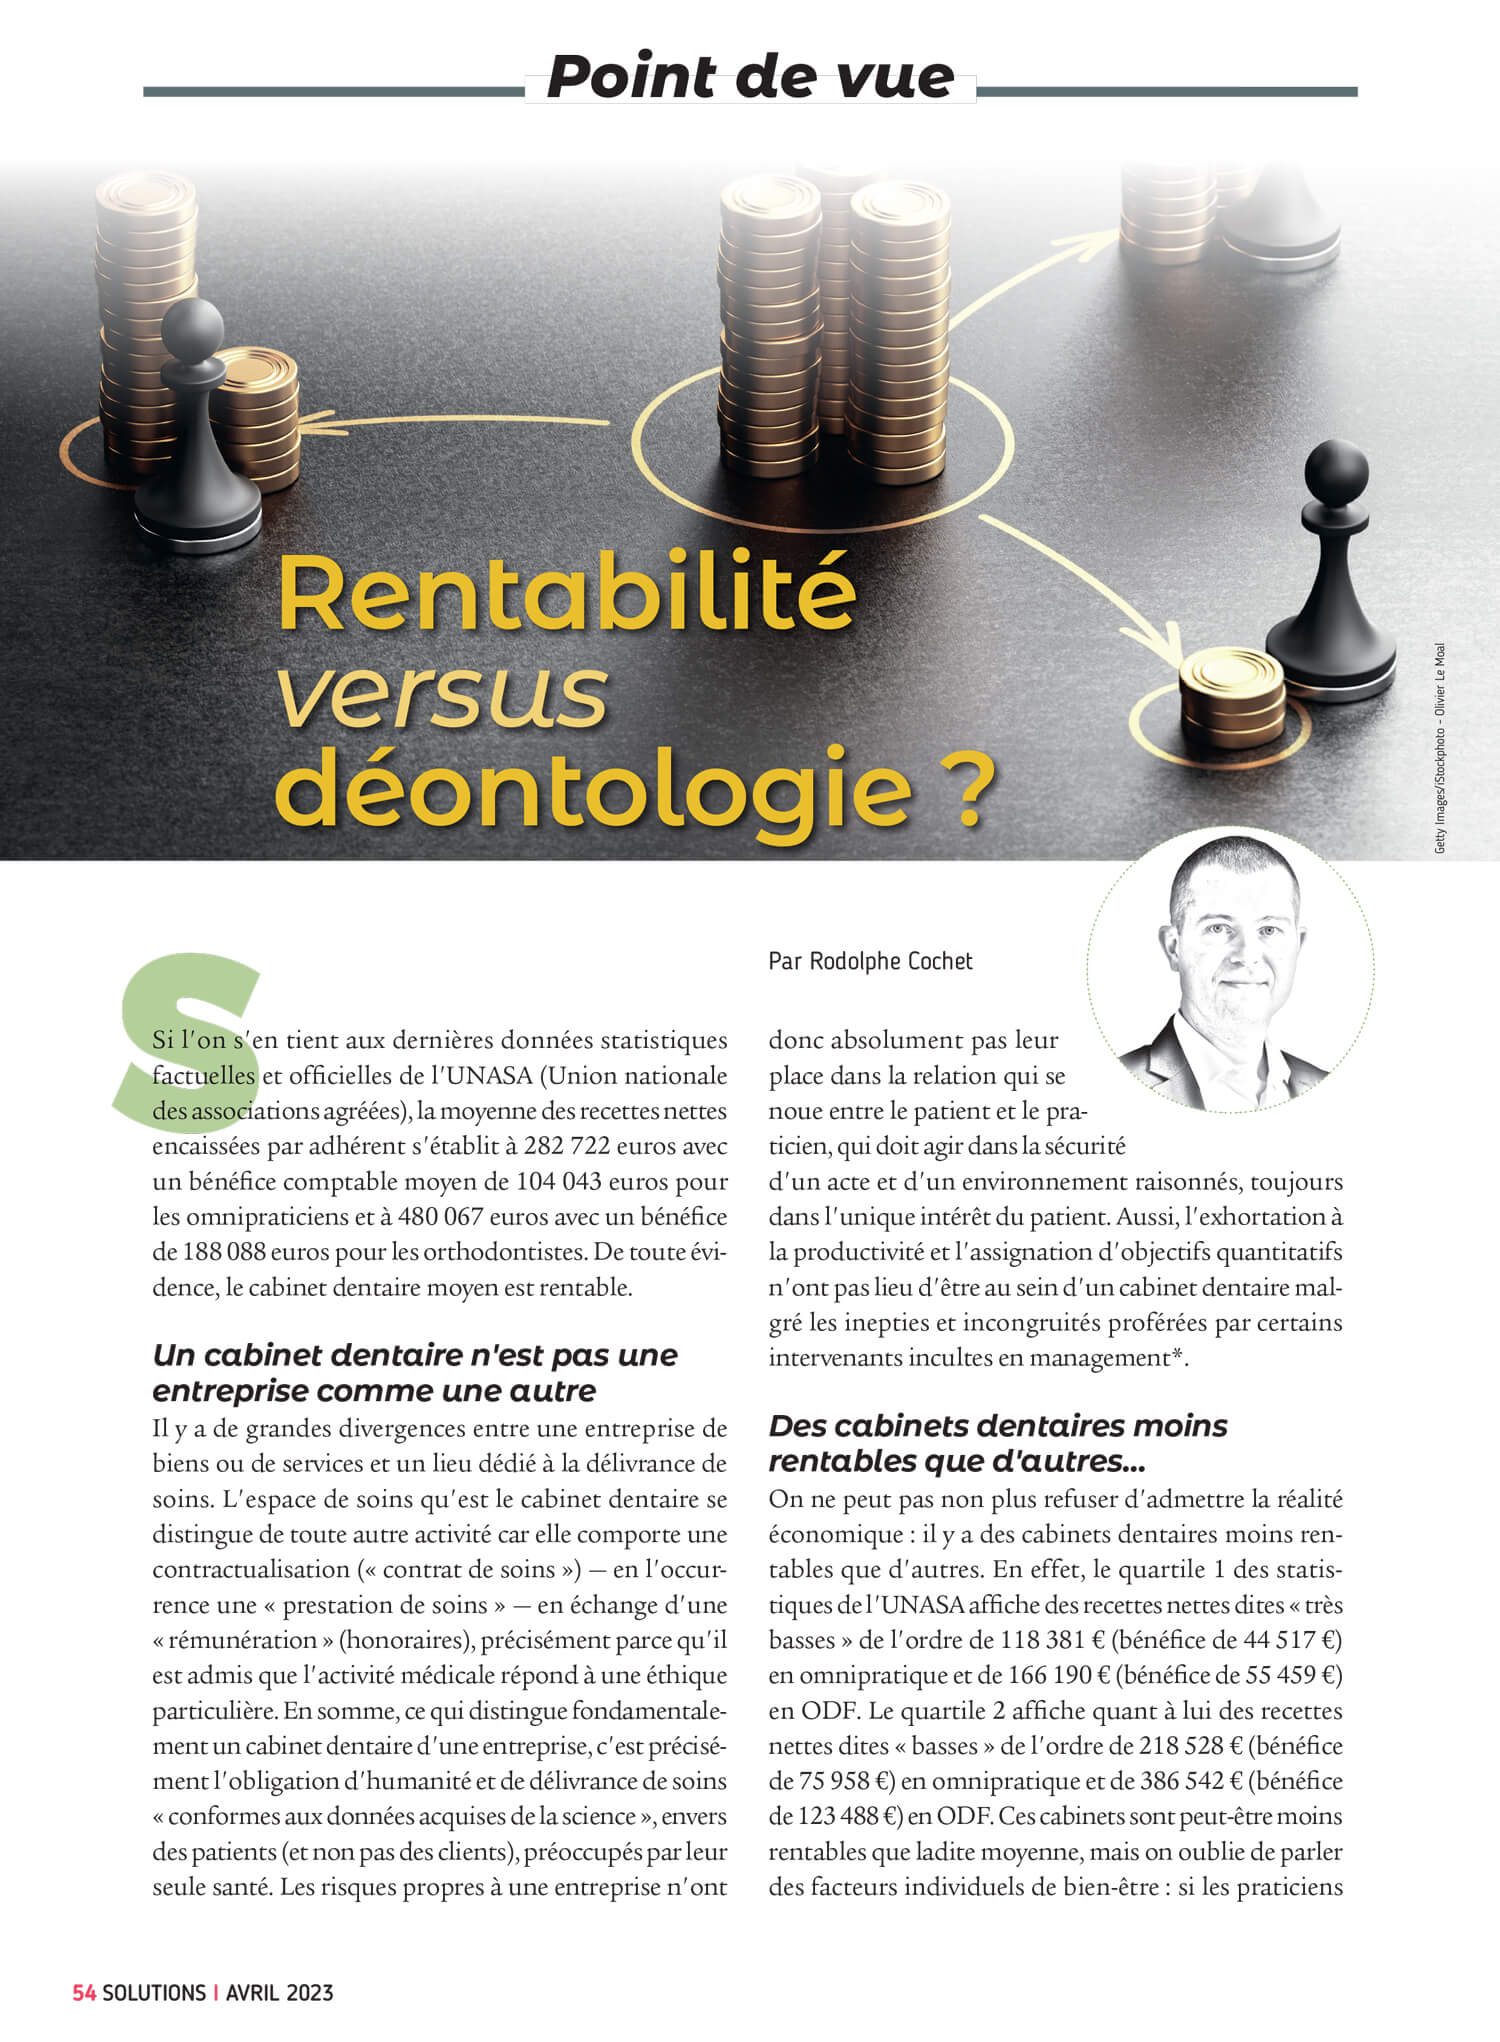 Rentabilite-versus-deontologie-au-cabinet-dentaire-Rodolphe-Cochet.jpg